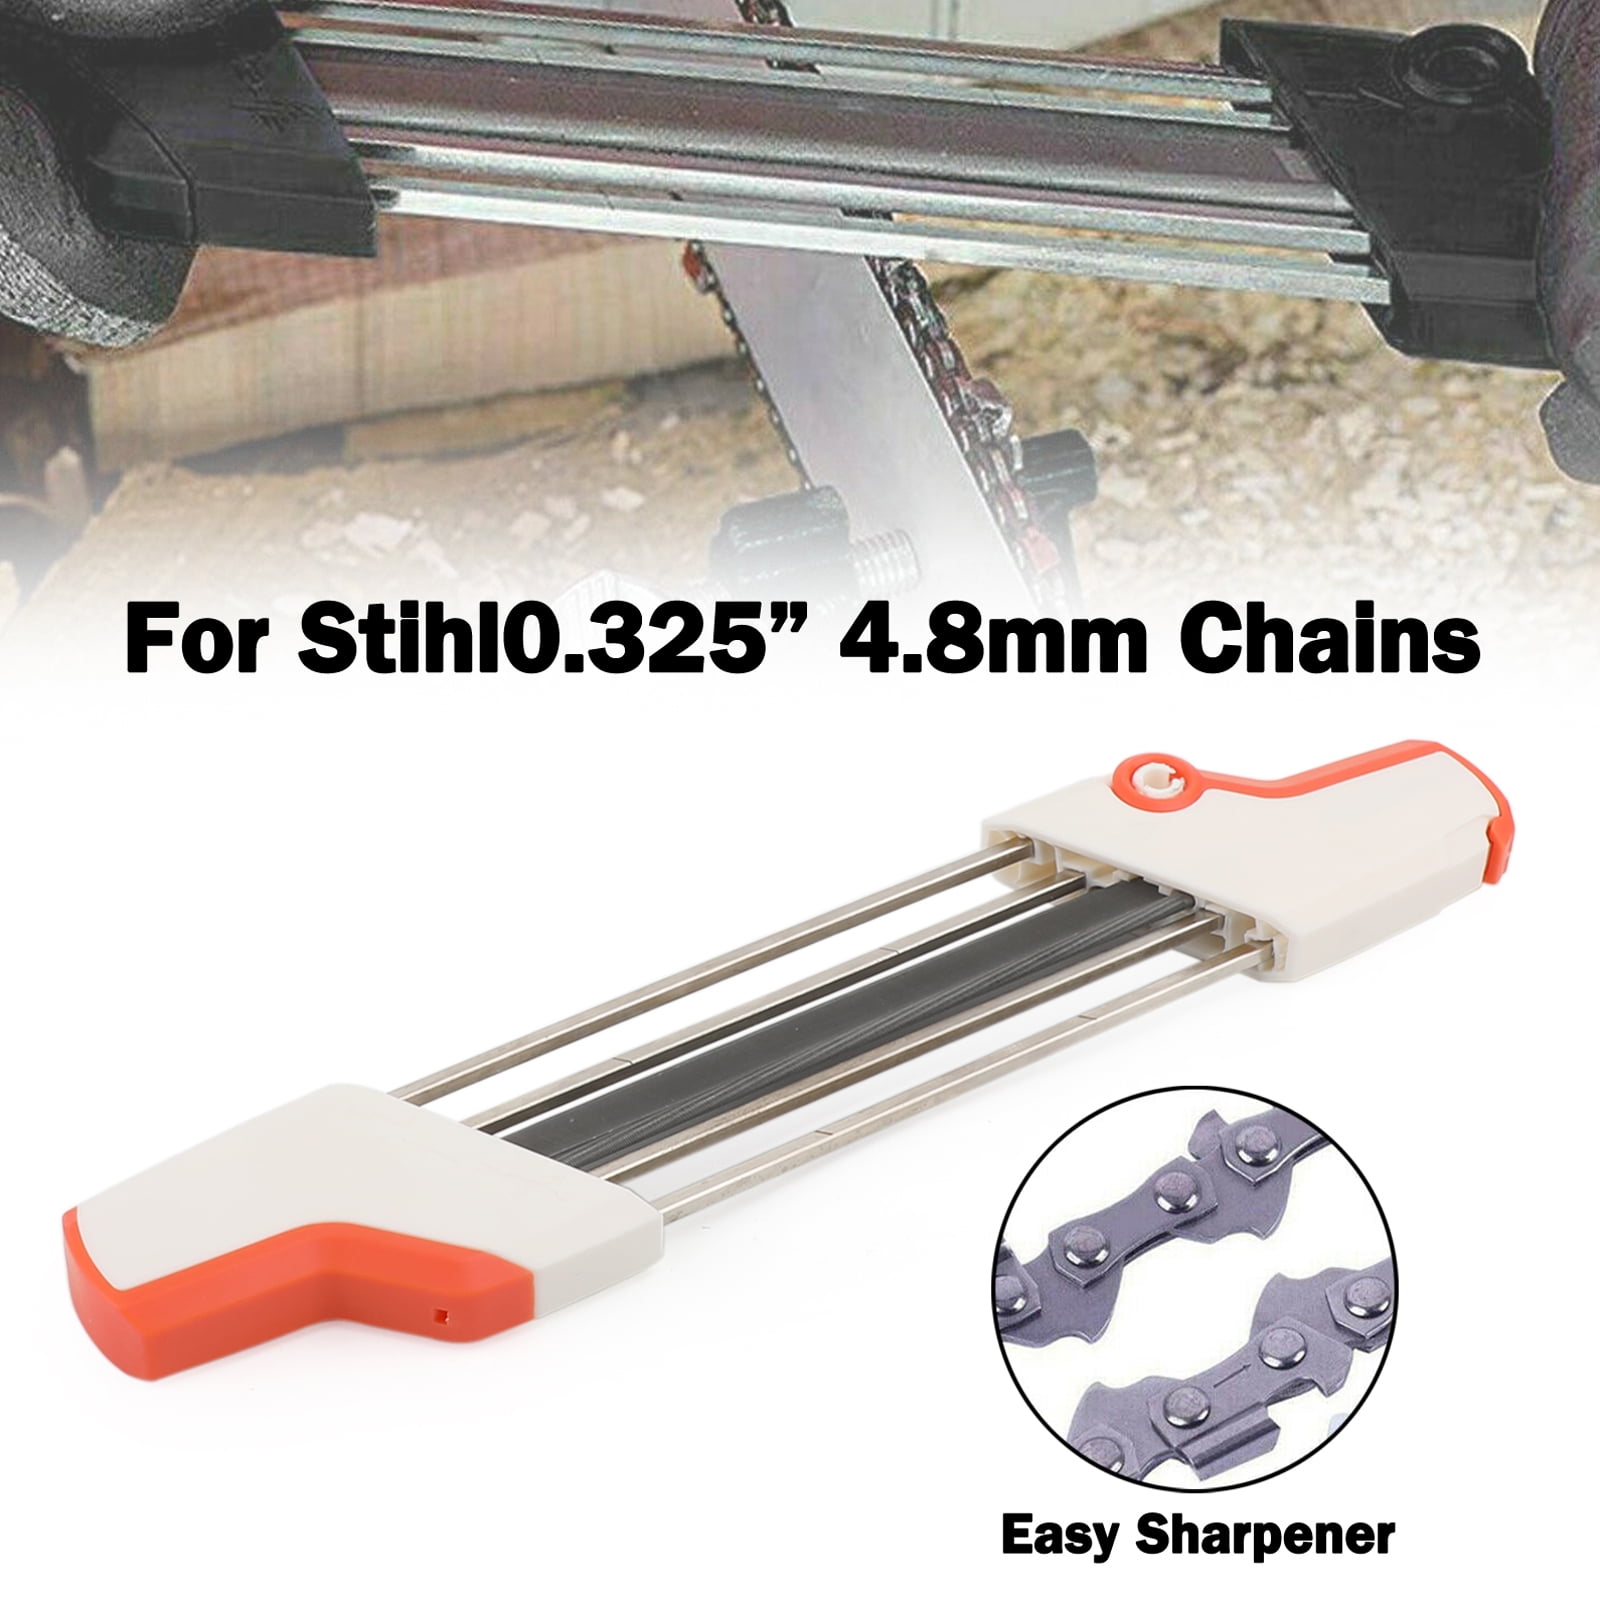 2 in 1 Chainsaw File & Holder Chain Sharpener Quick Easy Sharp